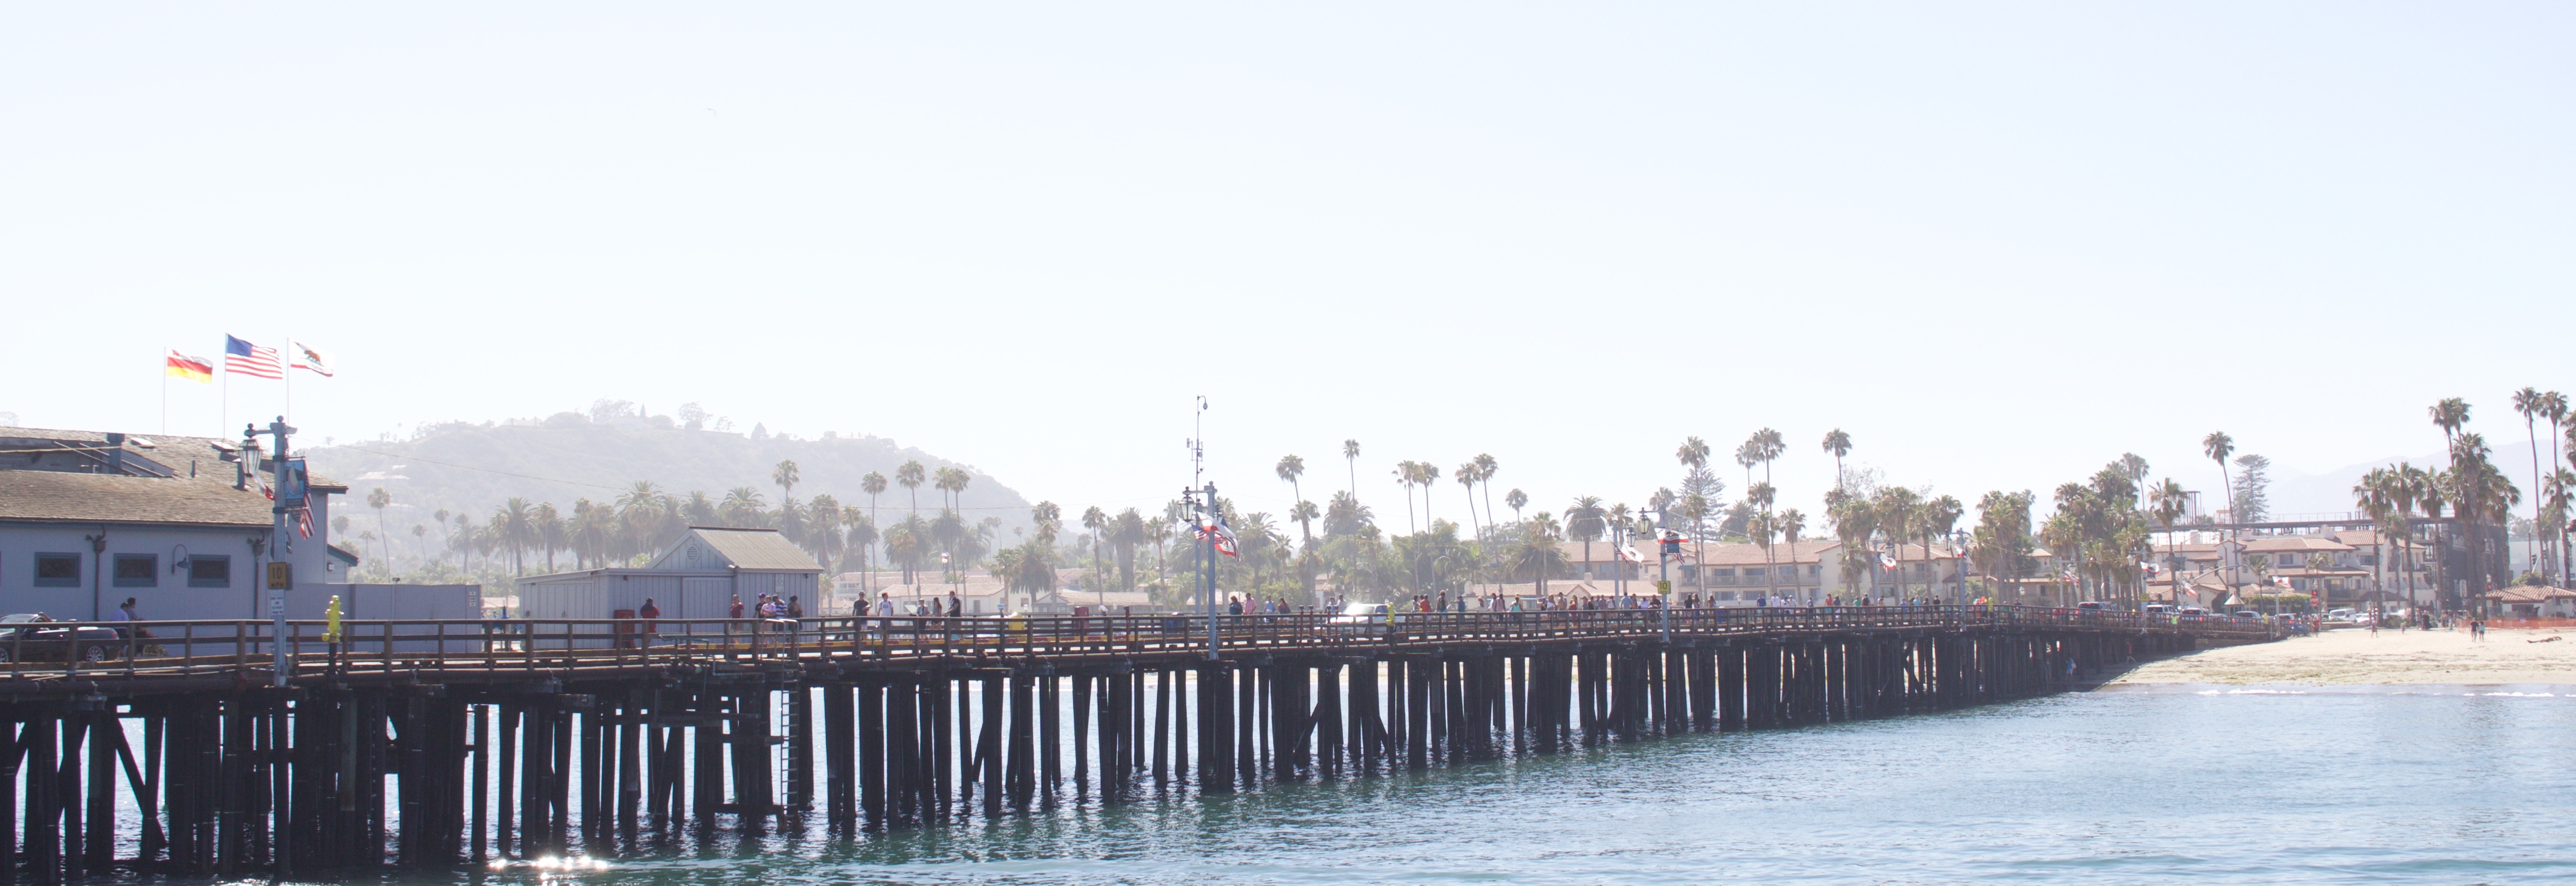 Santa Barbara, California day trip - Stearns Wharf - My Styled Life